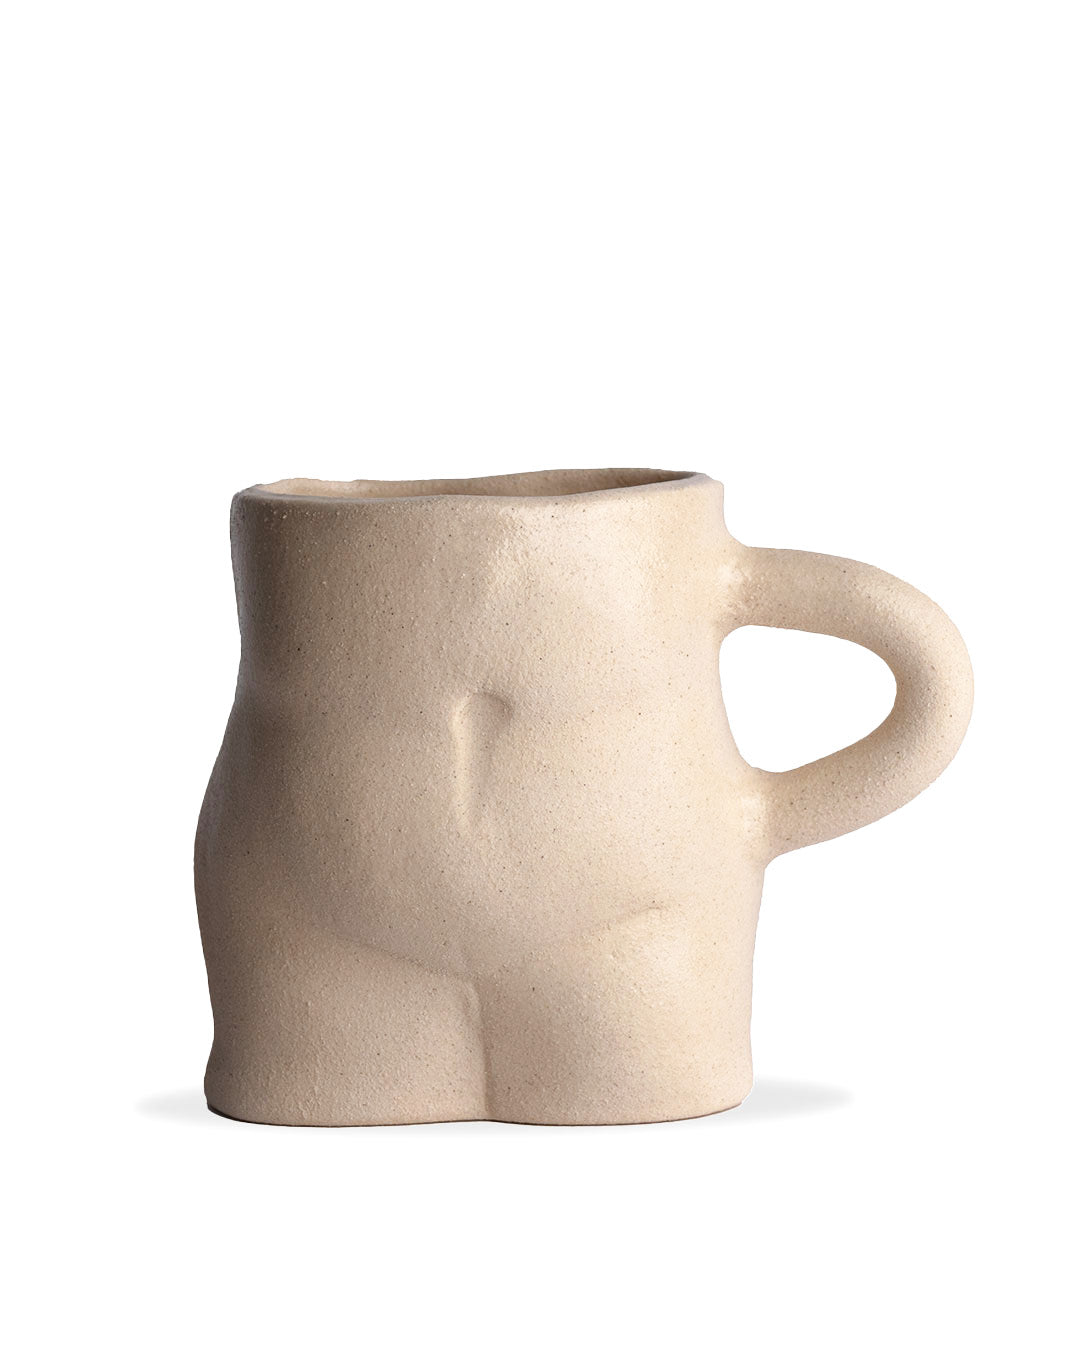  the Tits Boobs Cup Boobies 11 oz Ceramic Coffee Mug : Home &  Kitchen